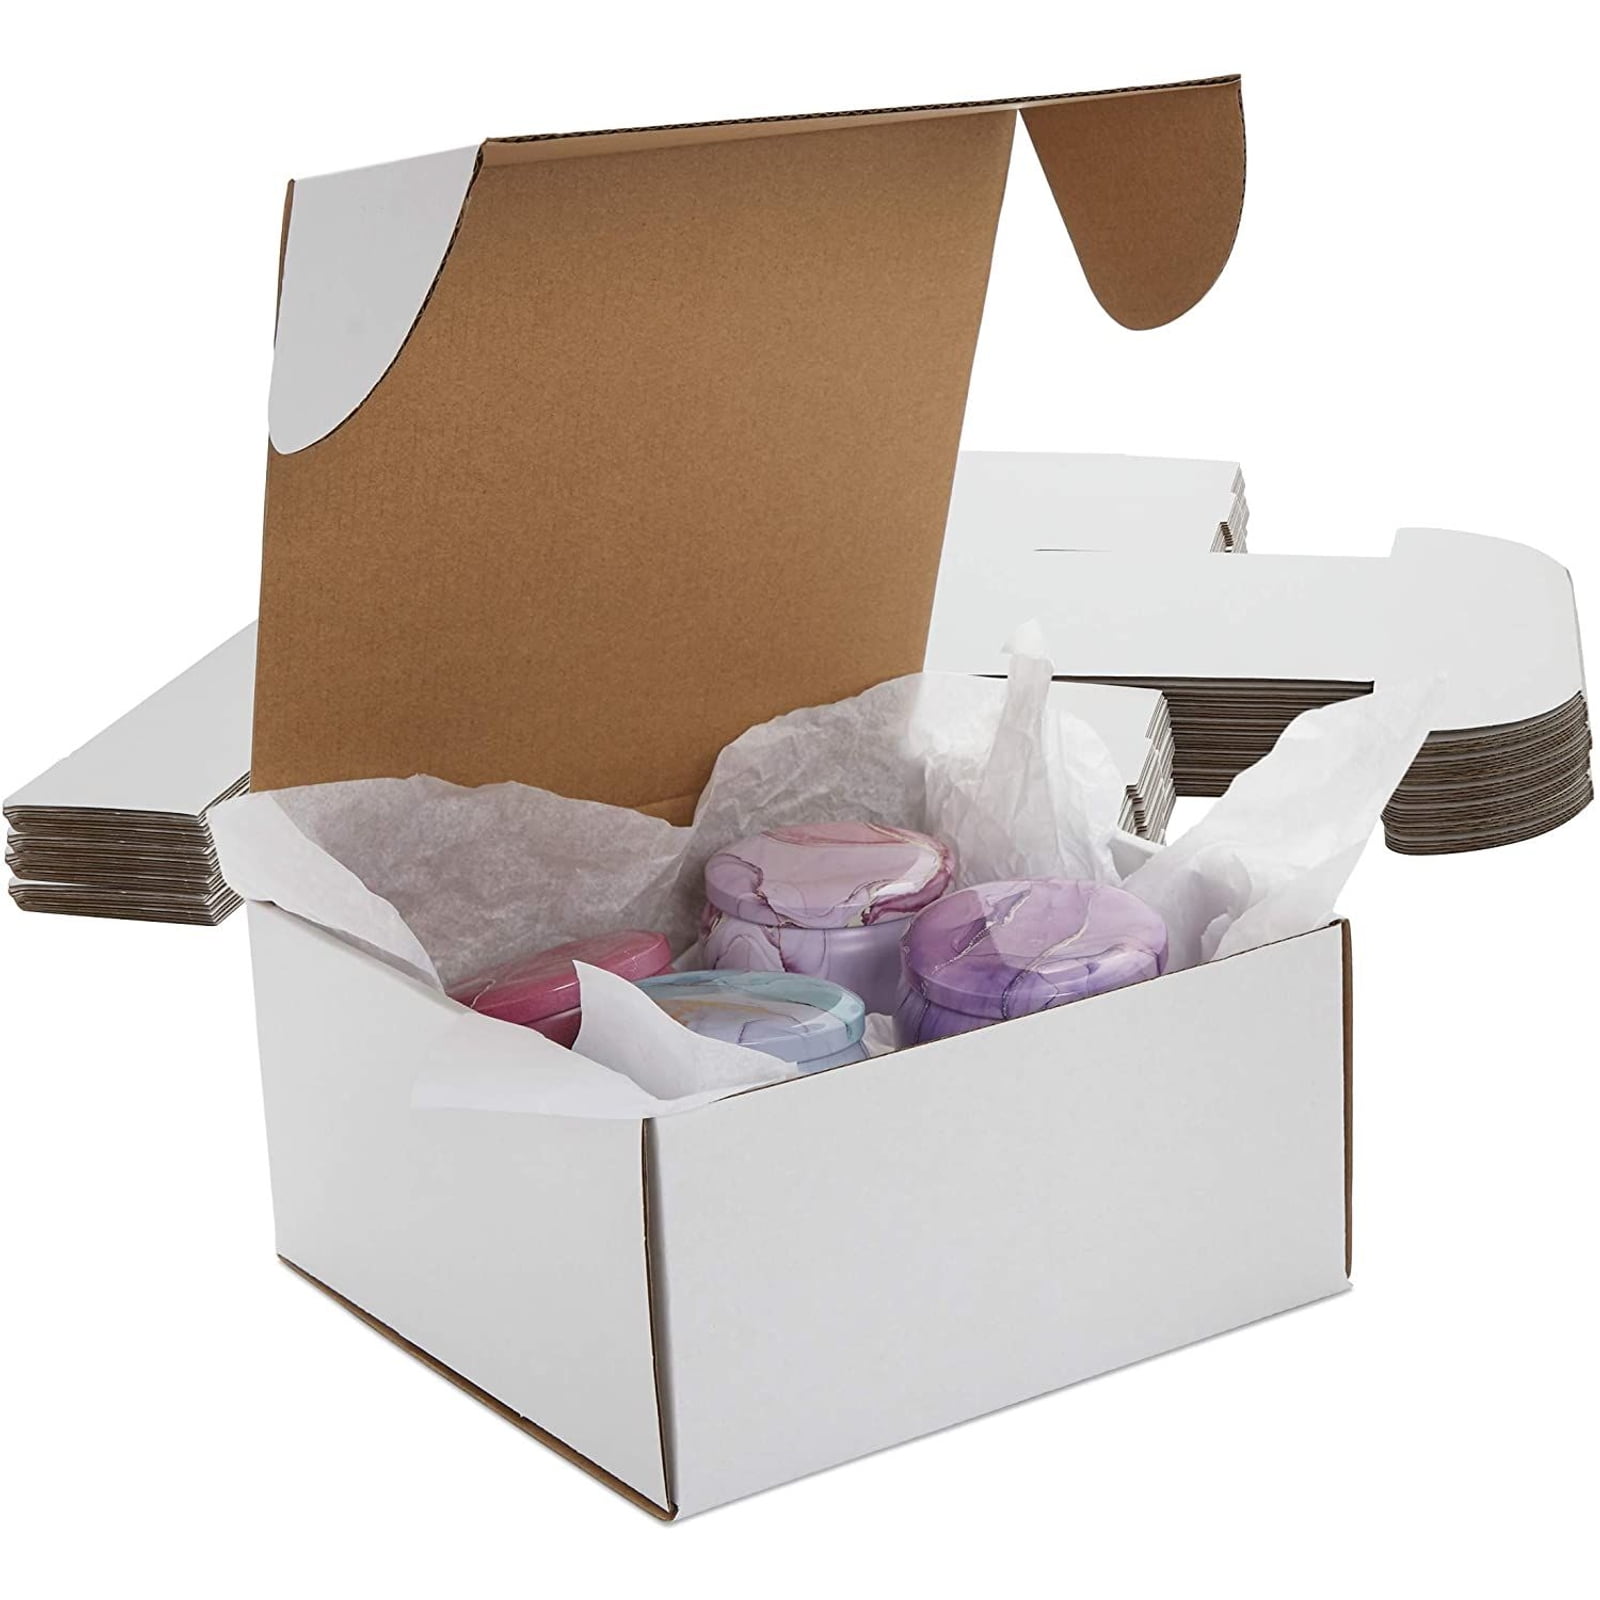 4 x 4 x 4 Boxes Gift 100 White Cardboard Mugs Small Figurines Retail Merchandise 